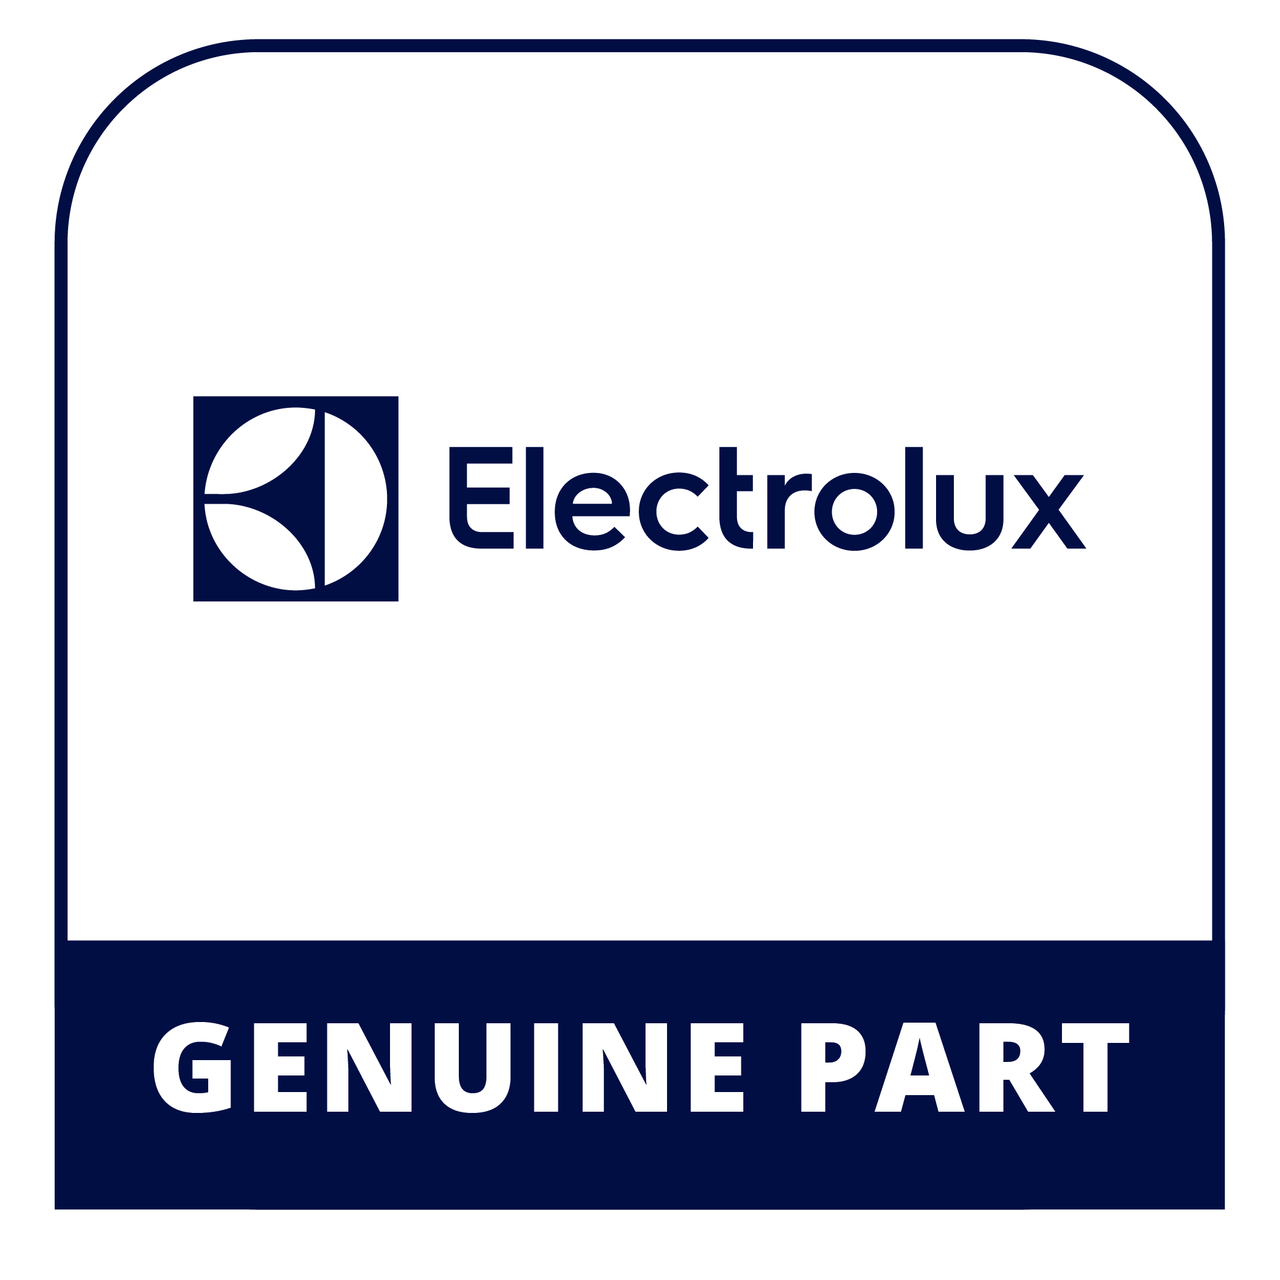 Frigidaire - Electrolux 218448301 - Cover - Genuine Electrolux Part